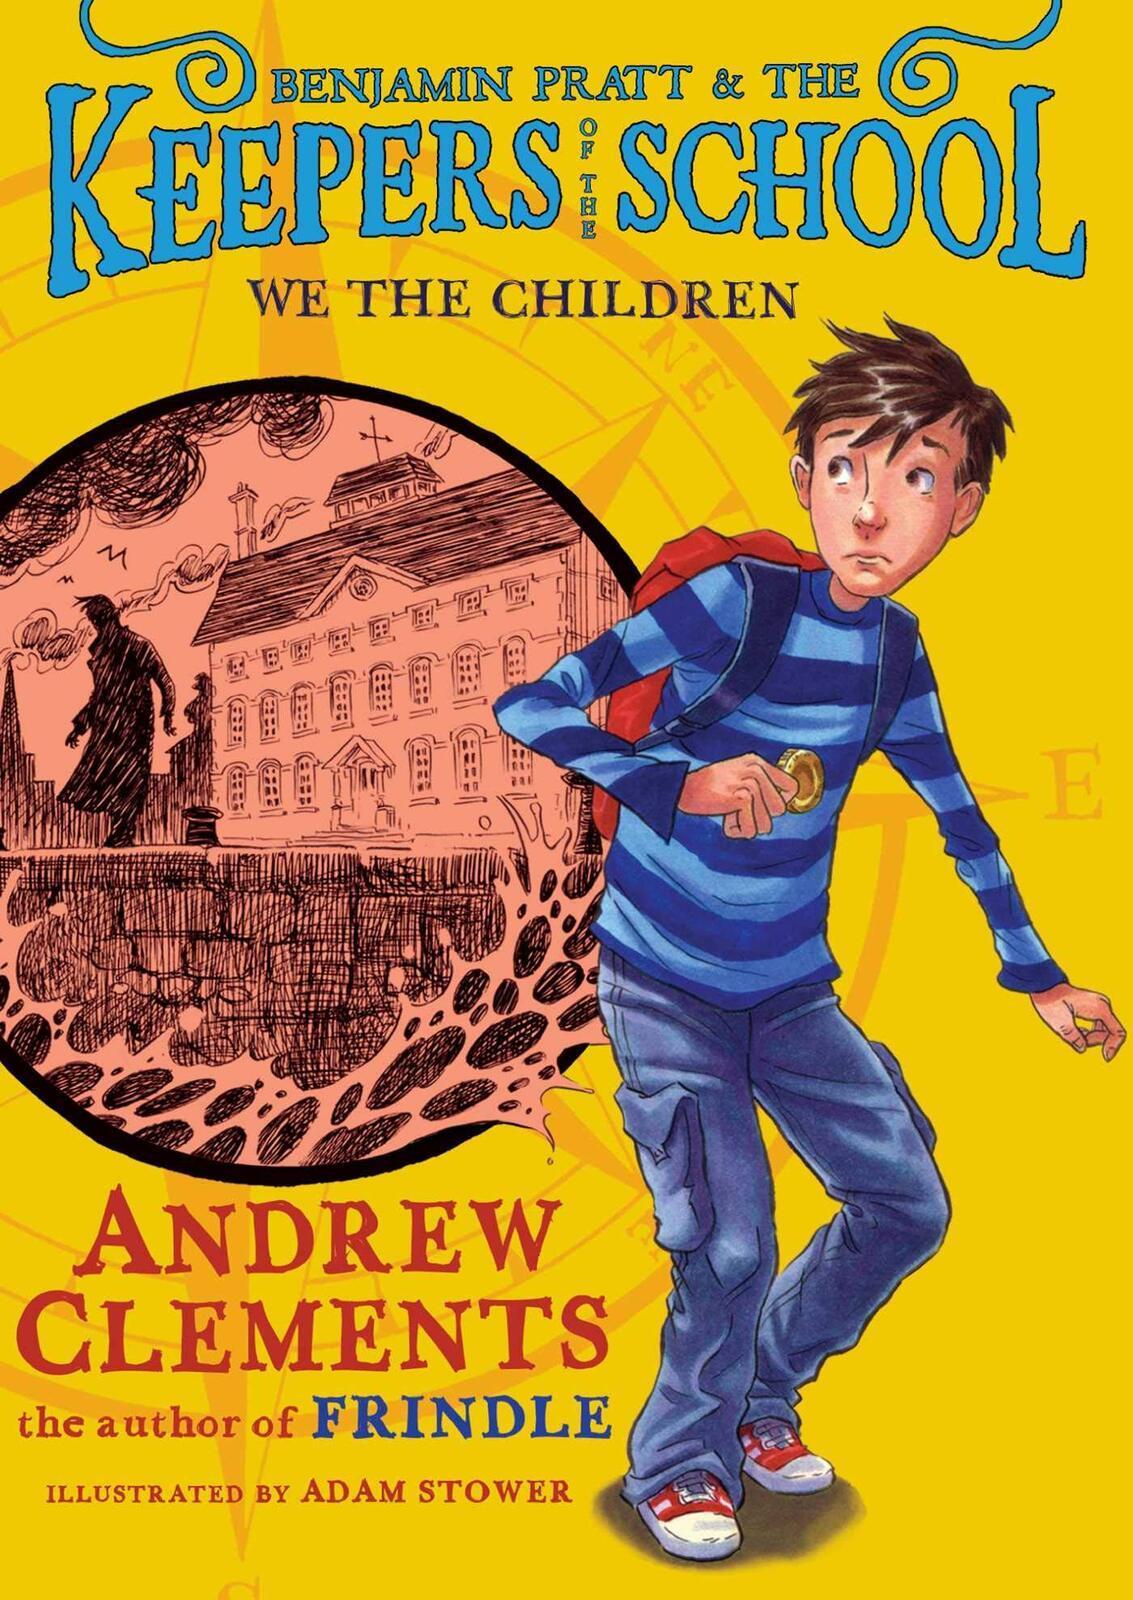 We the Children: Benjamin Pratt and the Keepers of the School Hardcover Book